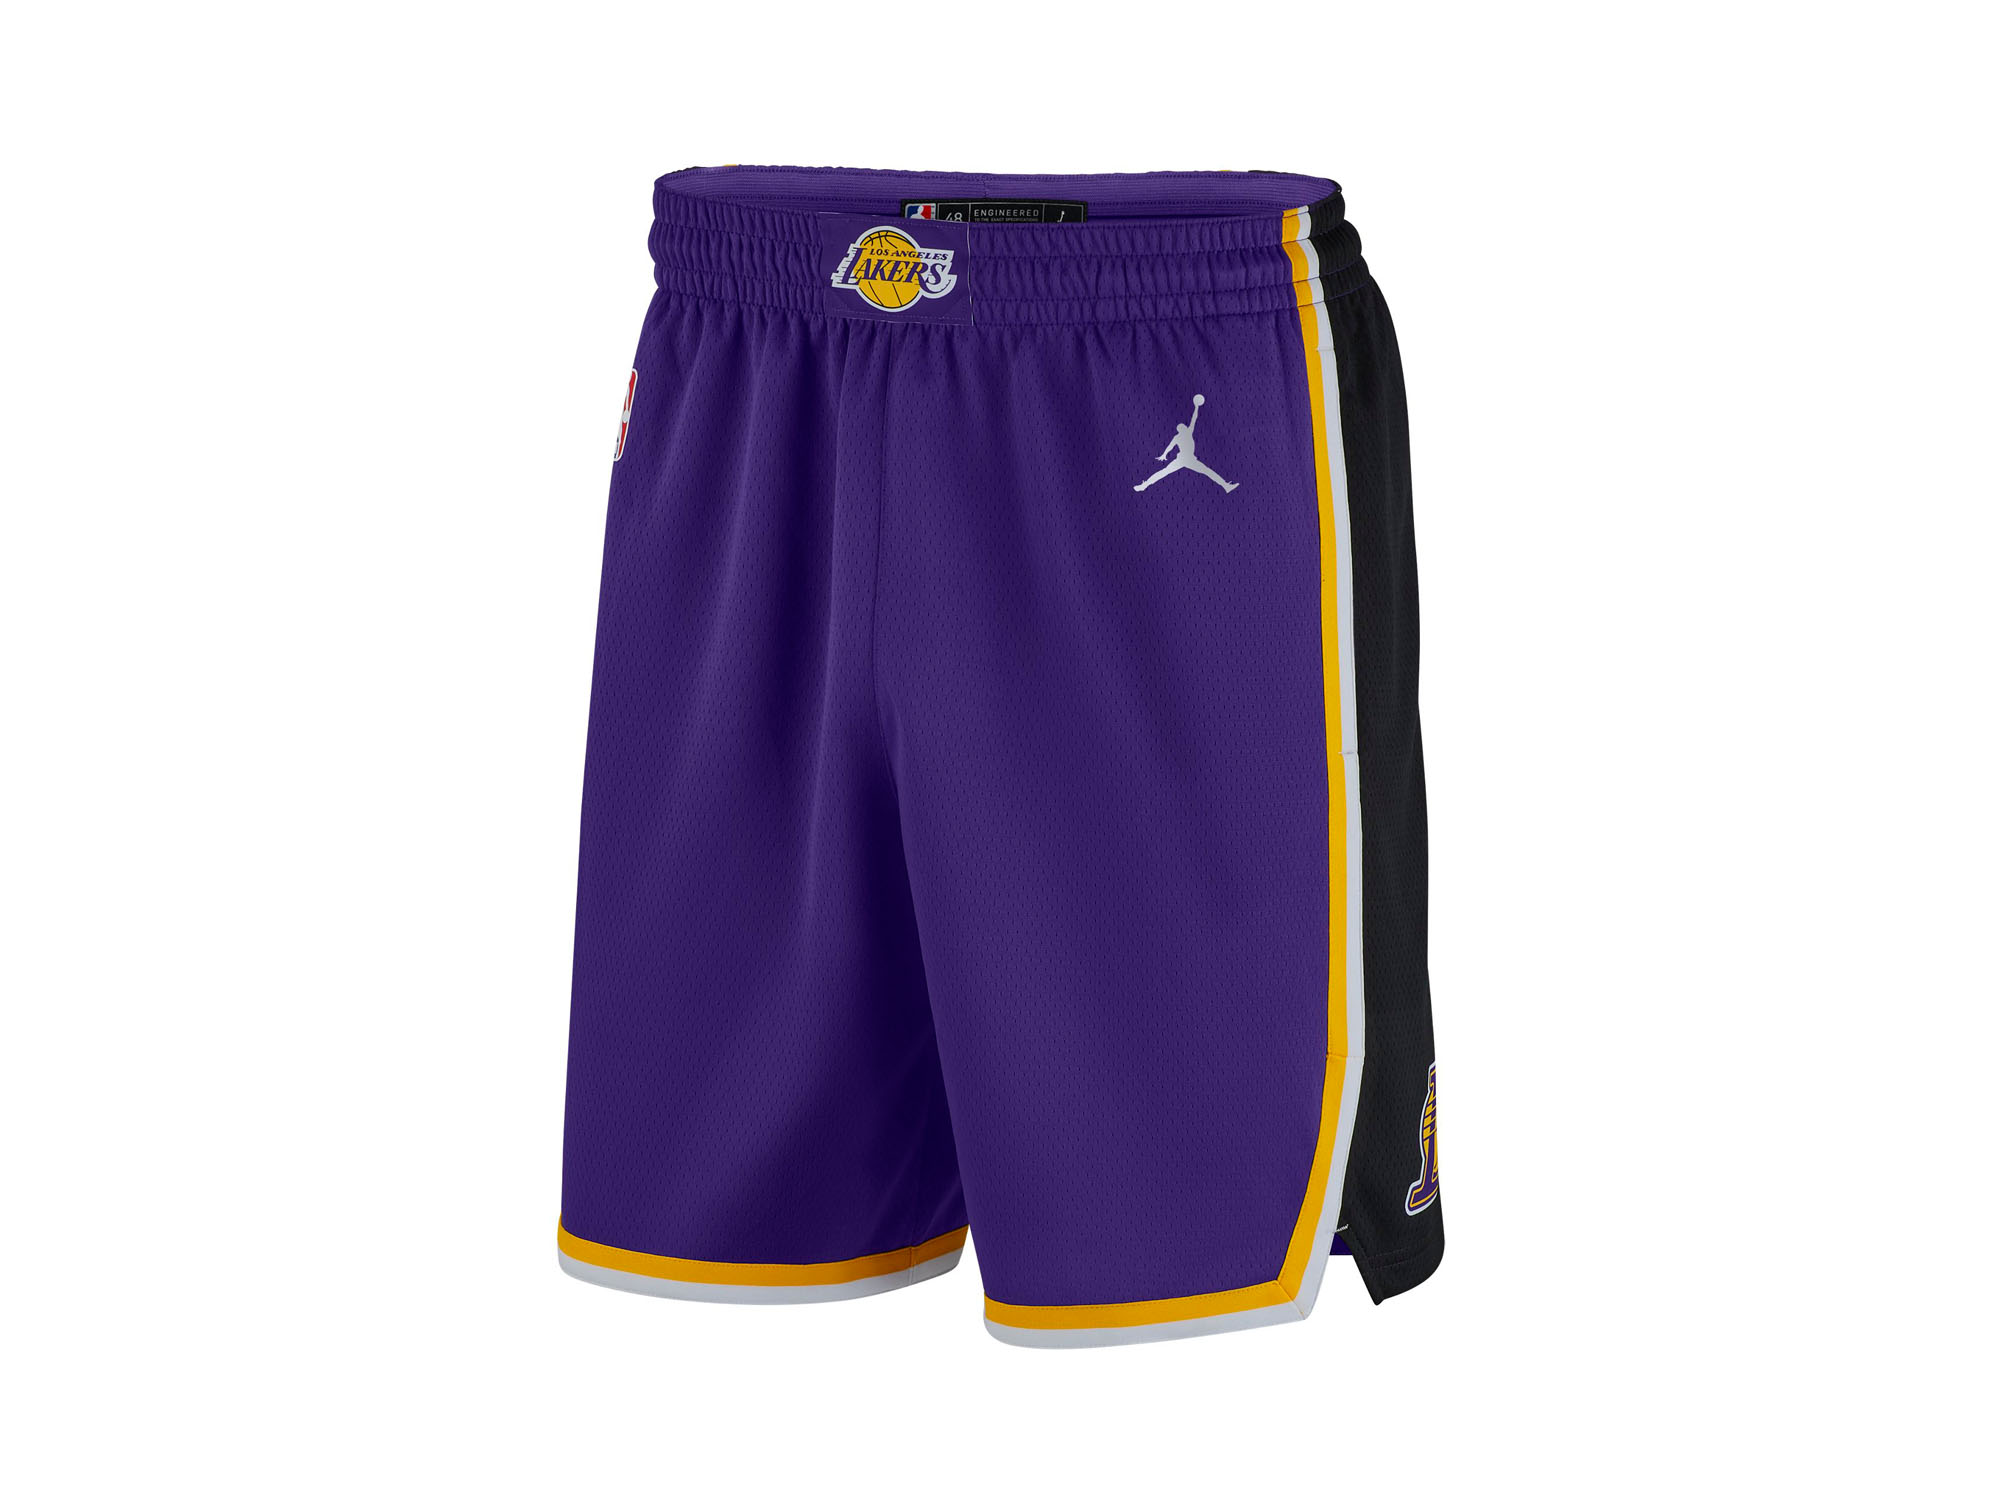 Jordan Los Angeles Lakers NBA Statement Edition Swingman Shorts 2020